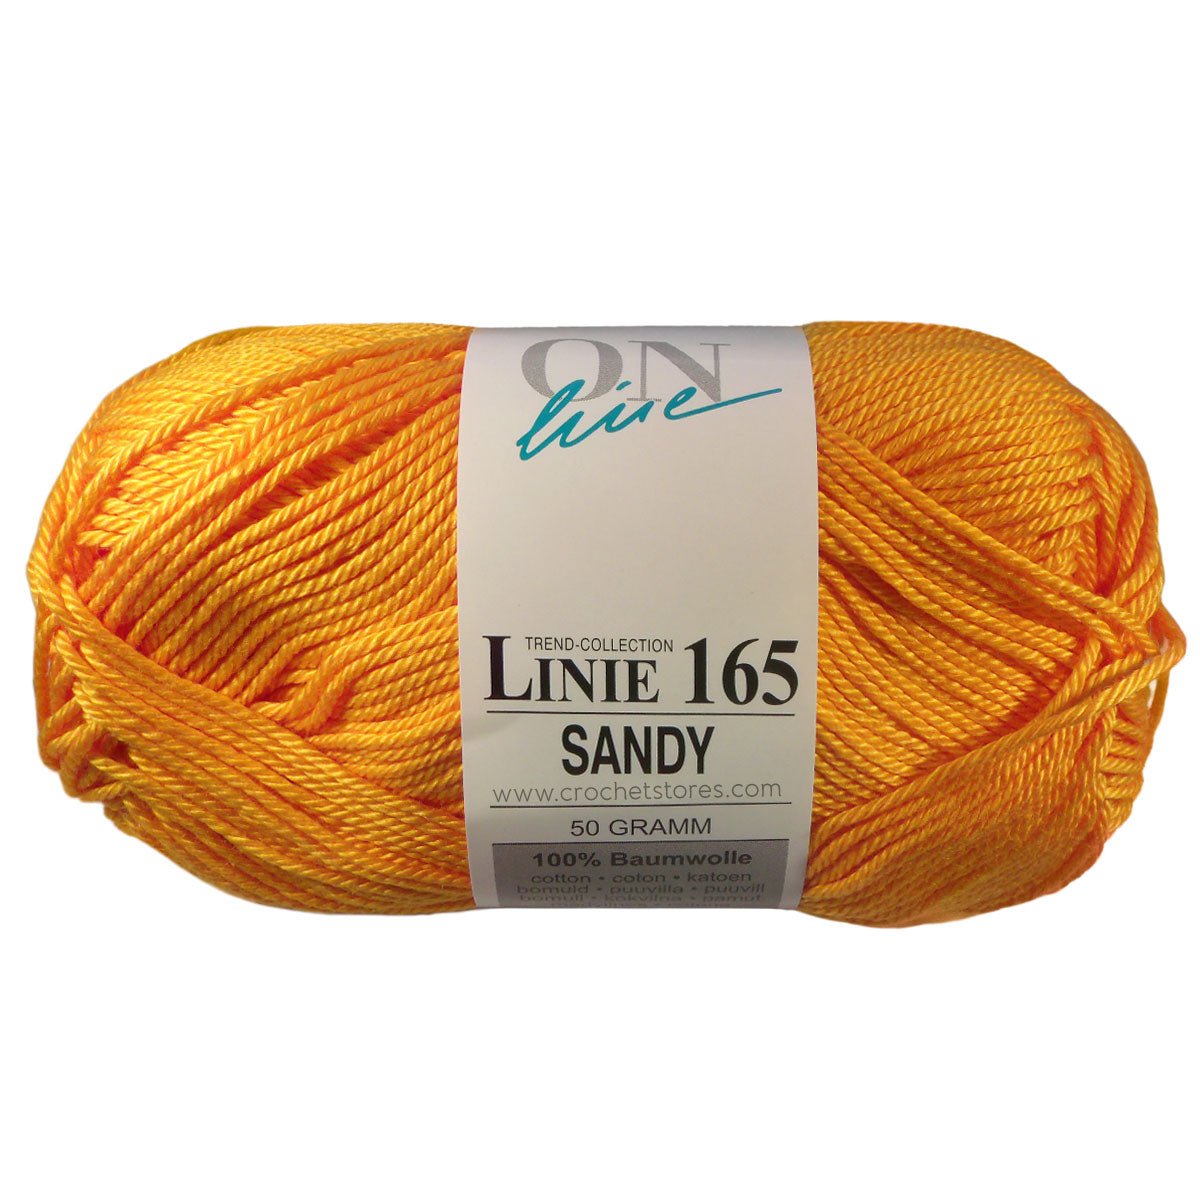 SANDY - Crochetstores110165-00704014366112167